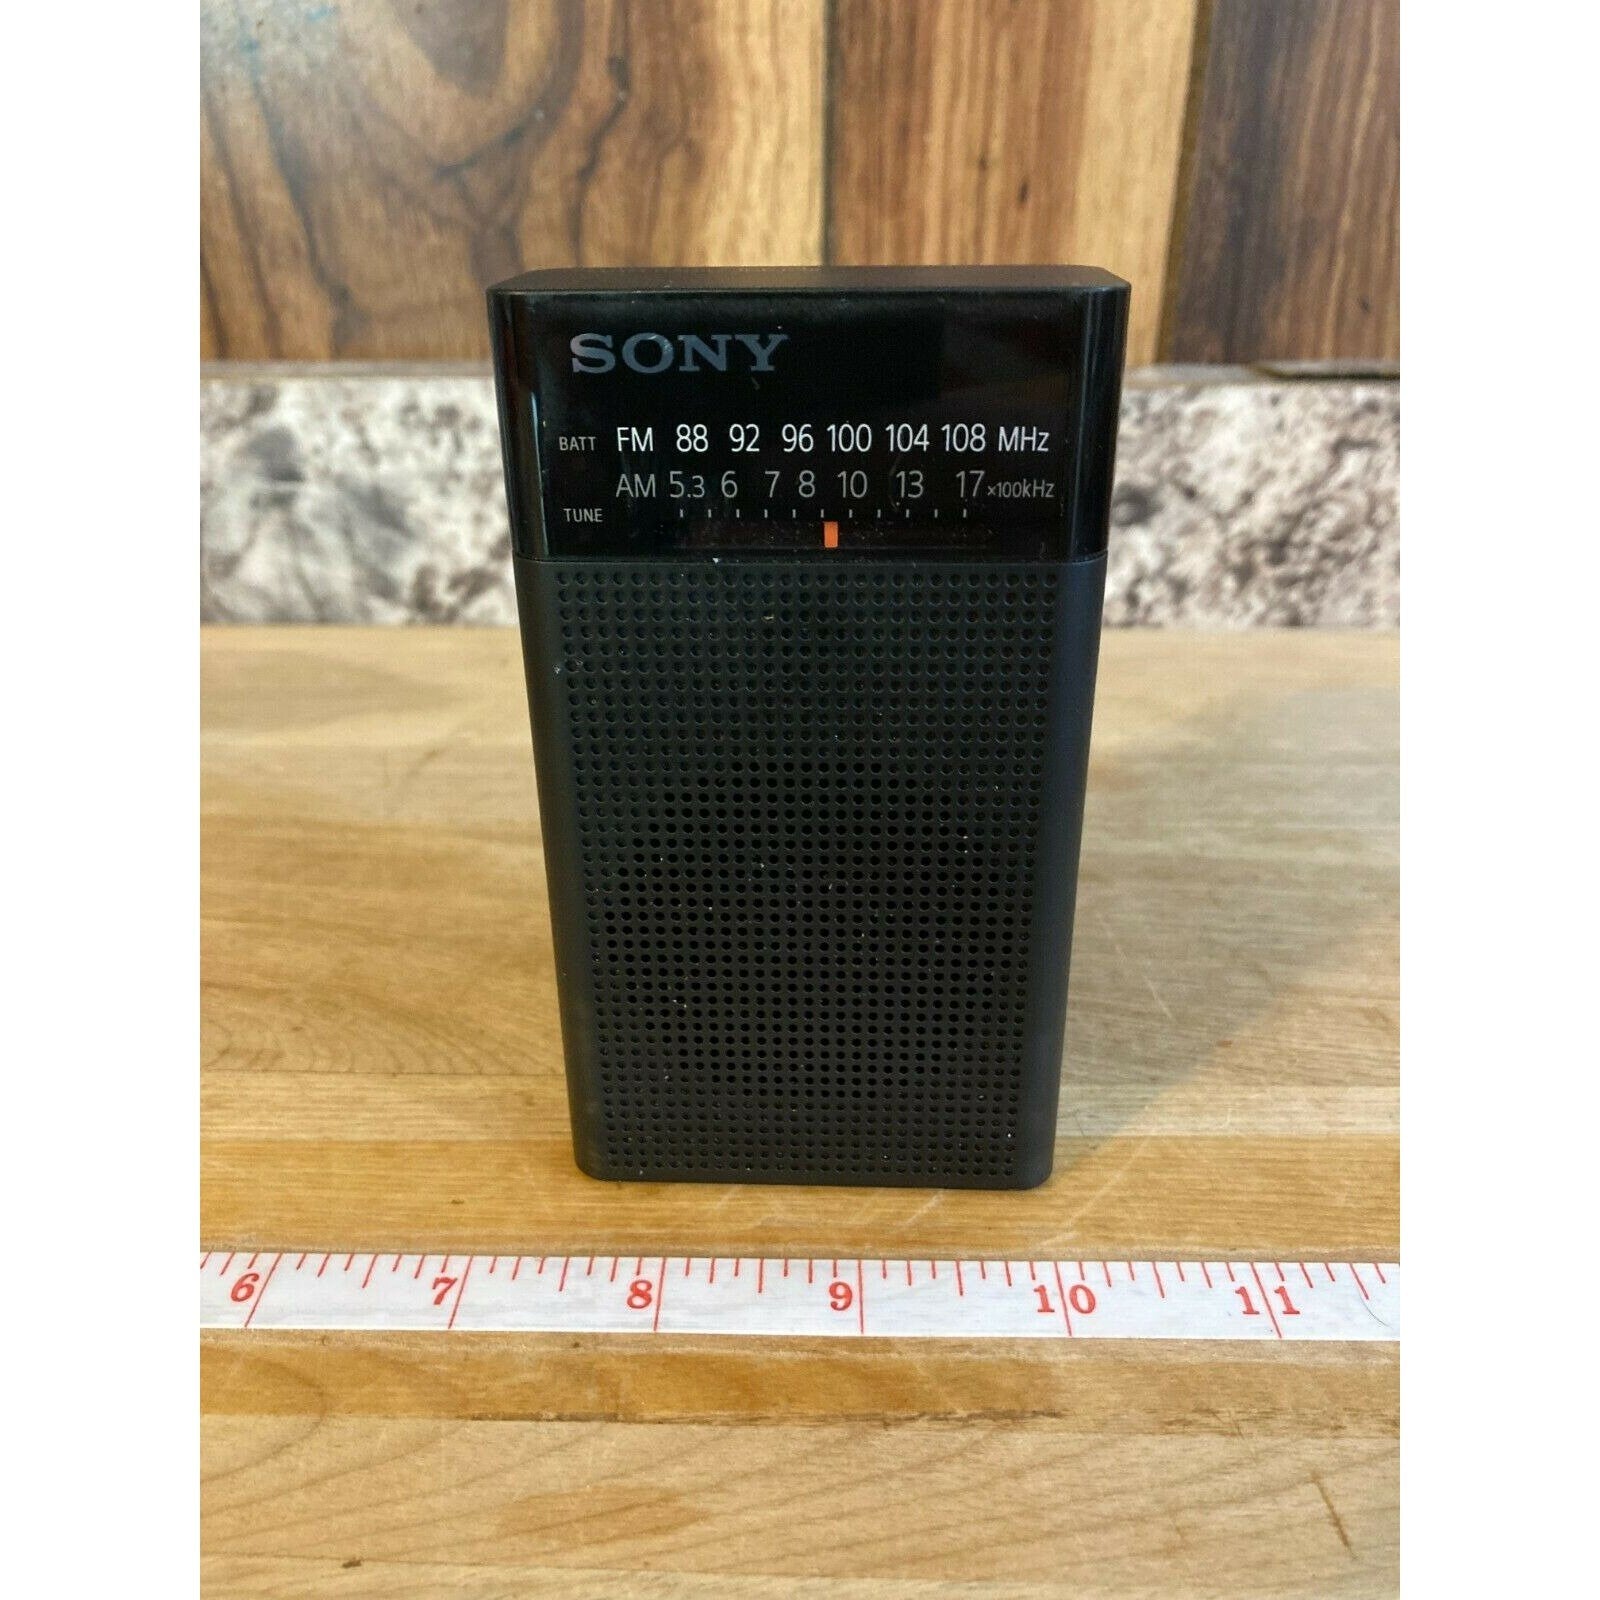 Sony ICF-P26 AM/FM Portable Pocket Radio, Black Vertical